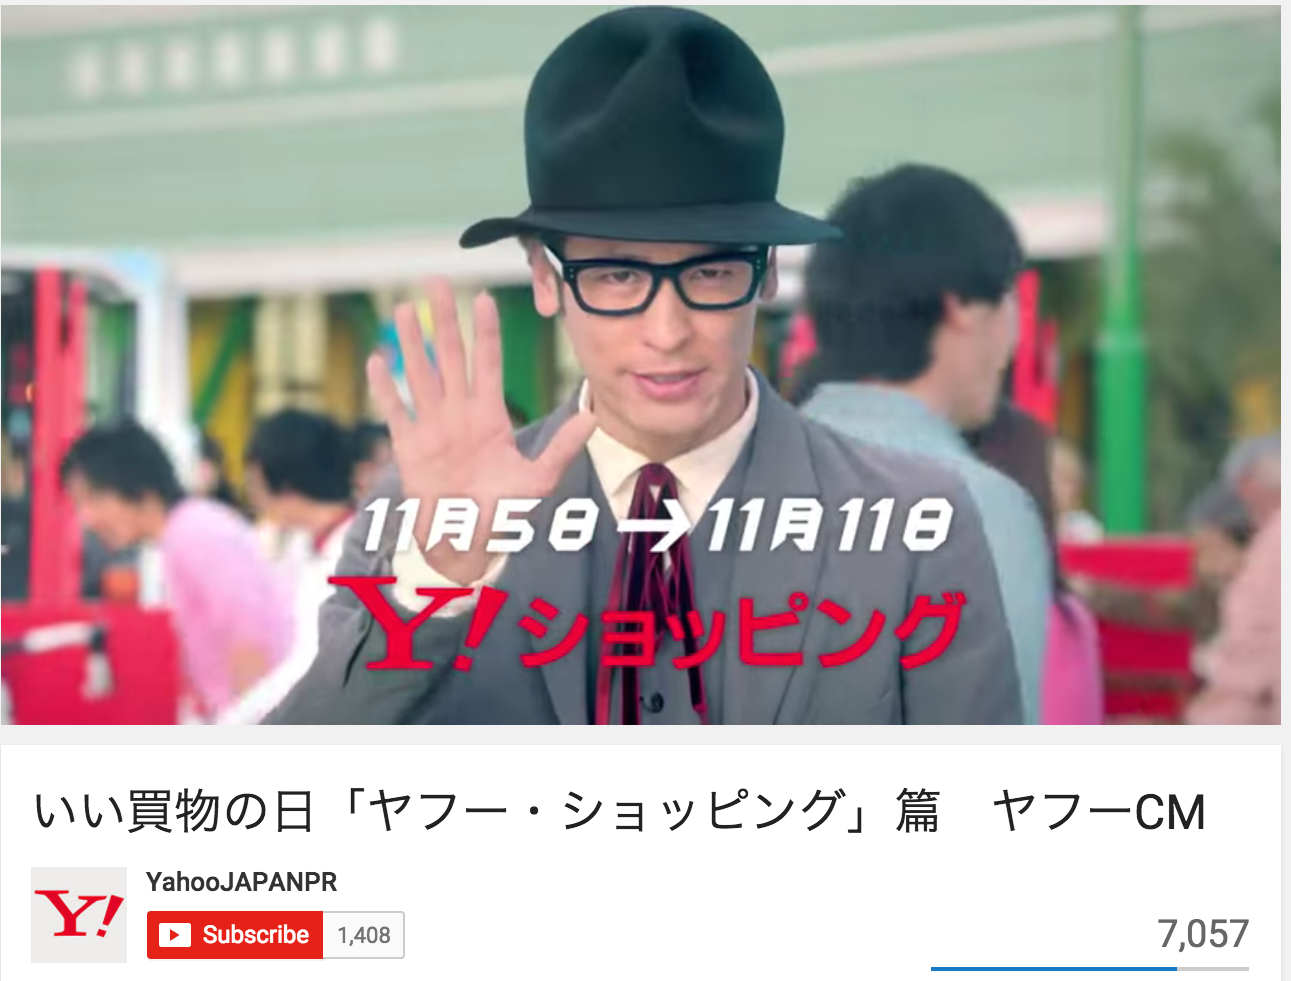 Yahoo Japan 11 11 YouTube Ad